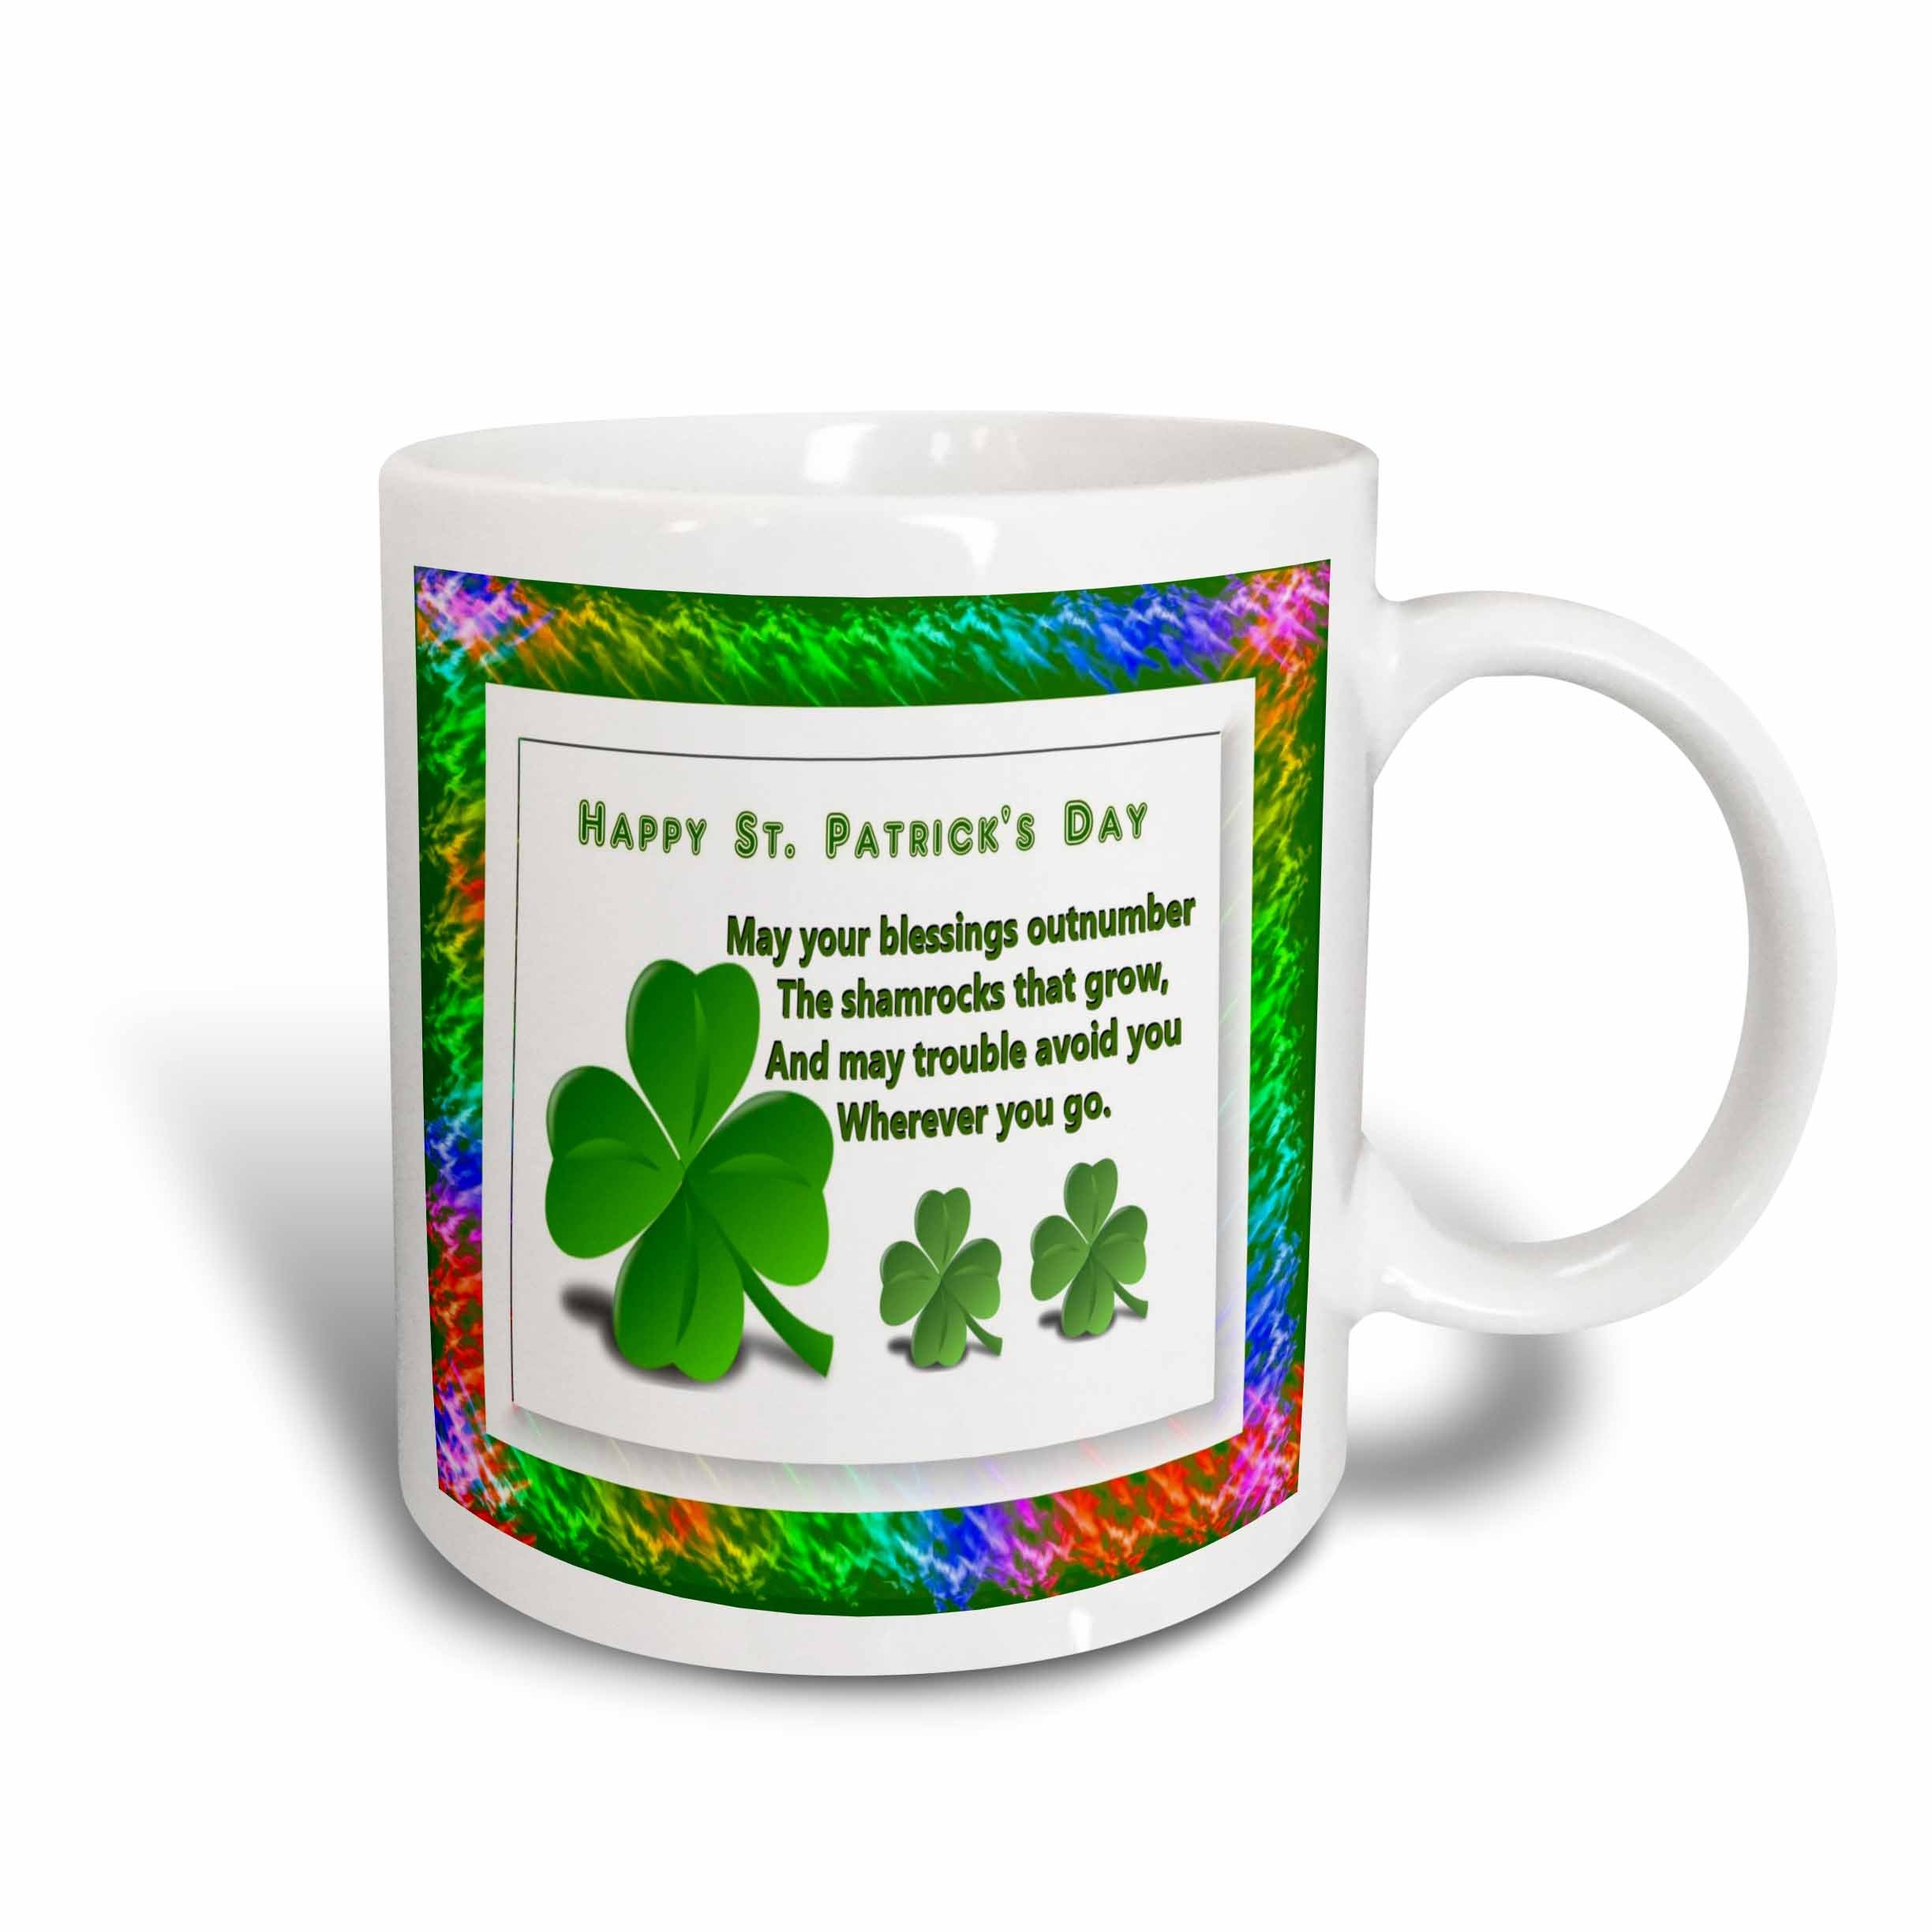 3dRose St. Patrick's Day Ceramic Mug, 15-Ounce